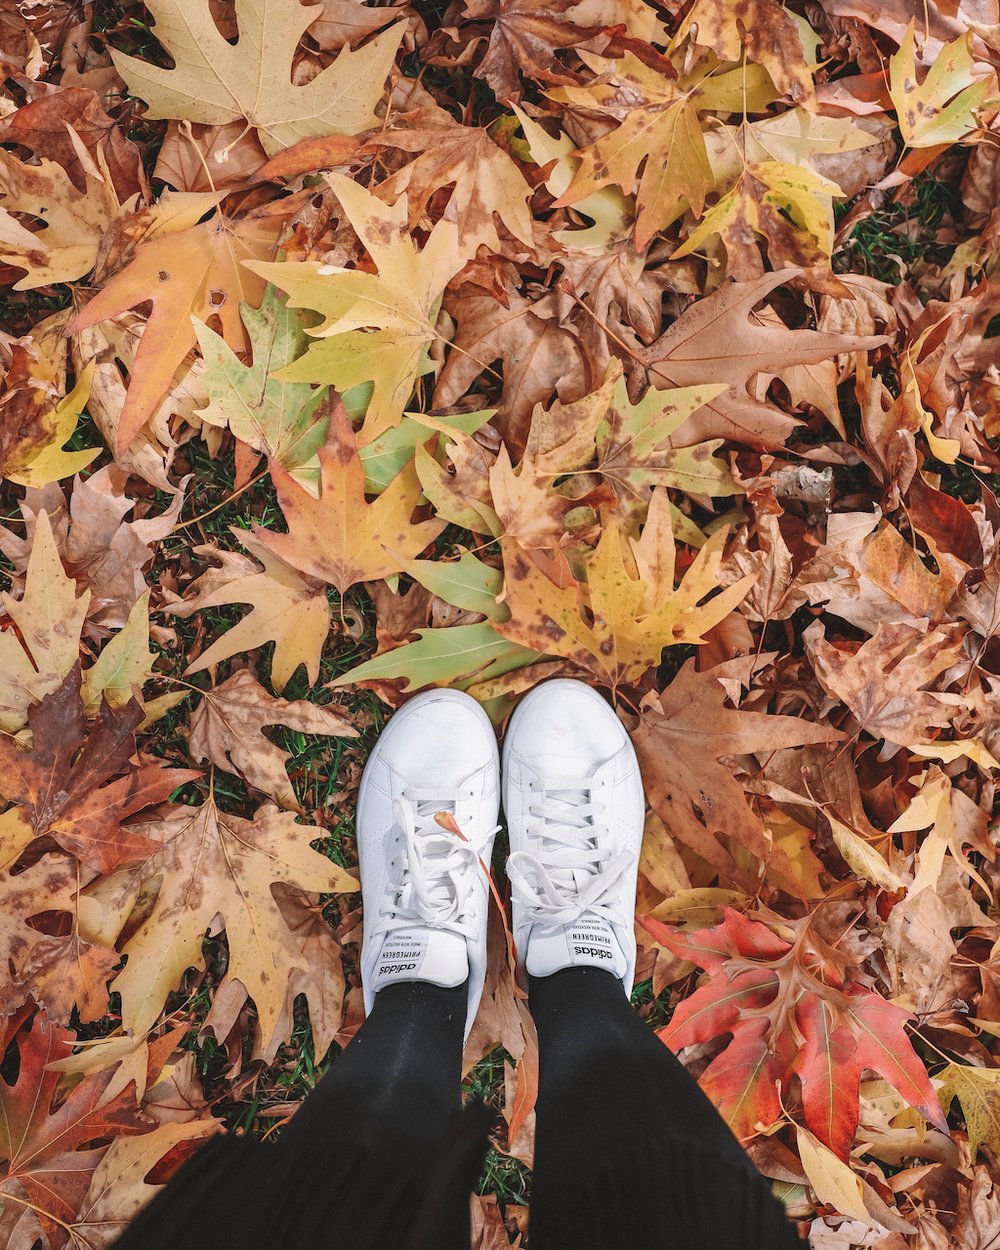 Stepping on fallen autumn leaves - Lennox Park - Canberra - Australian Capital Territory - Australia